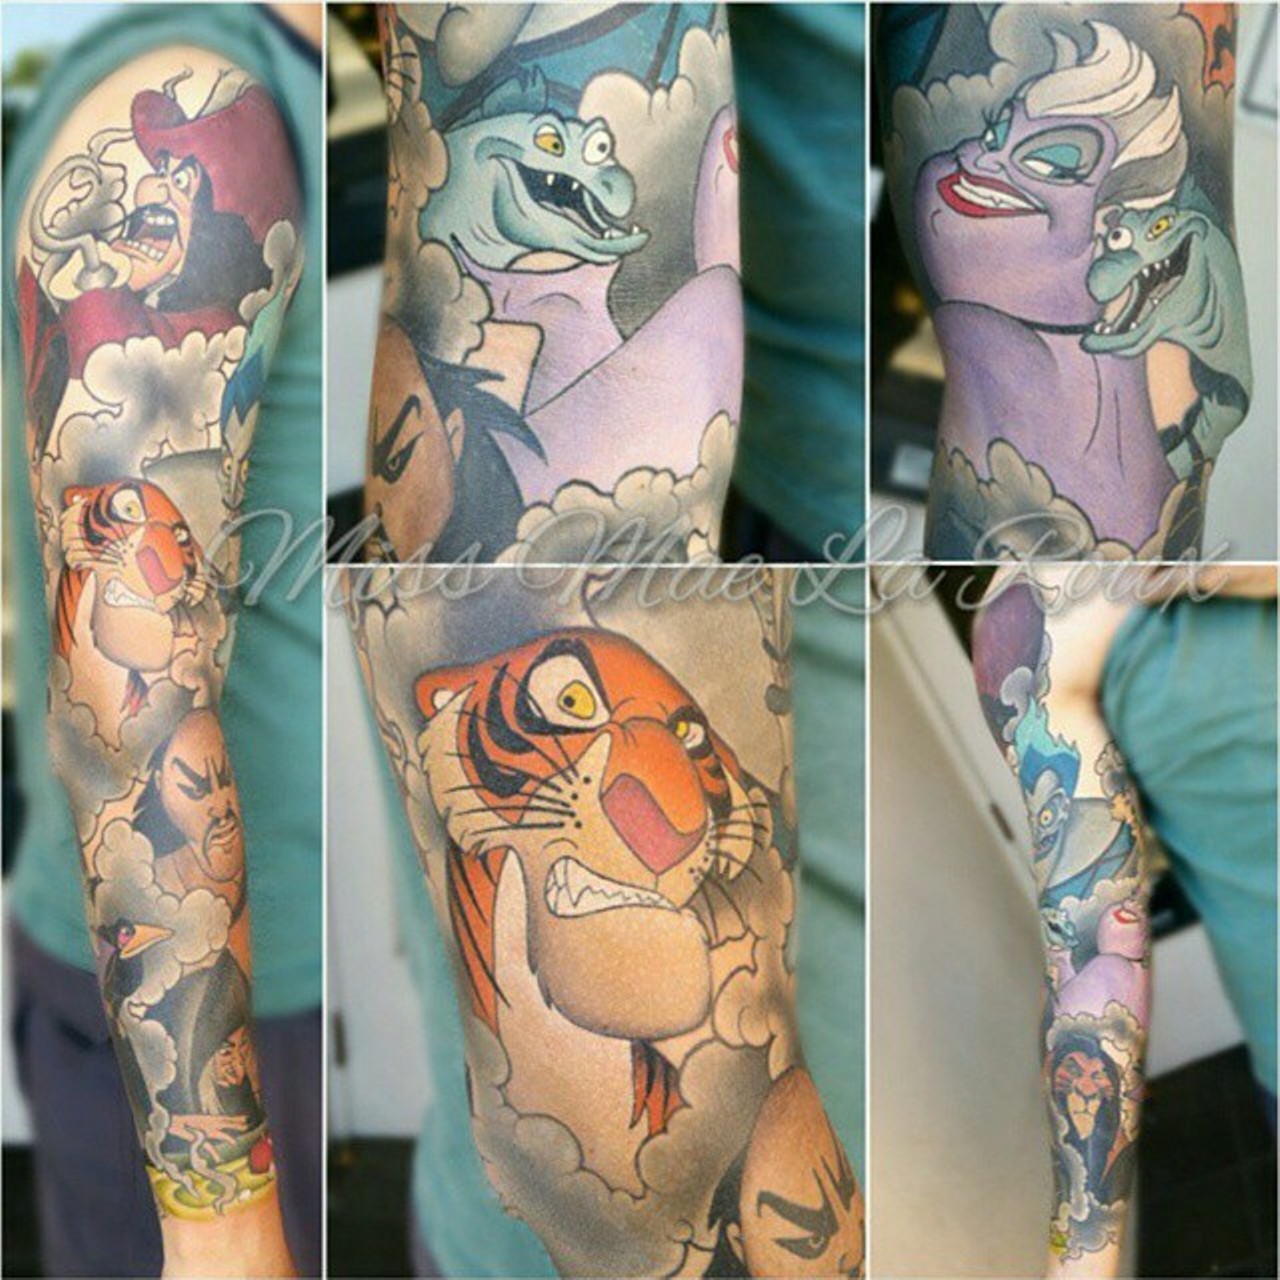 Sublime Disney sleeve by @cyncityink on @liz_miner87 in an @sthompsonart  style ❤️❤️. #disneytattoo #disney … | Disney sleeve tattoos, Sleeve tattoos,  Disney tattoos